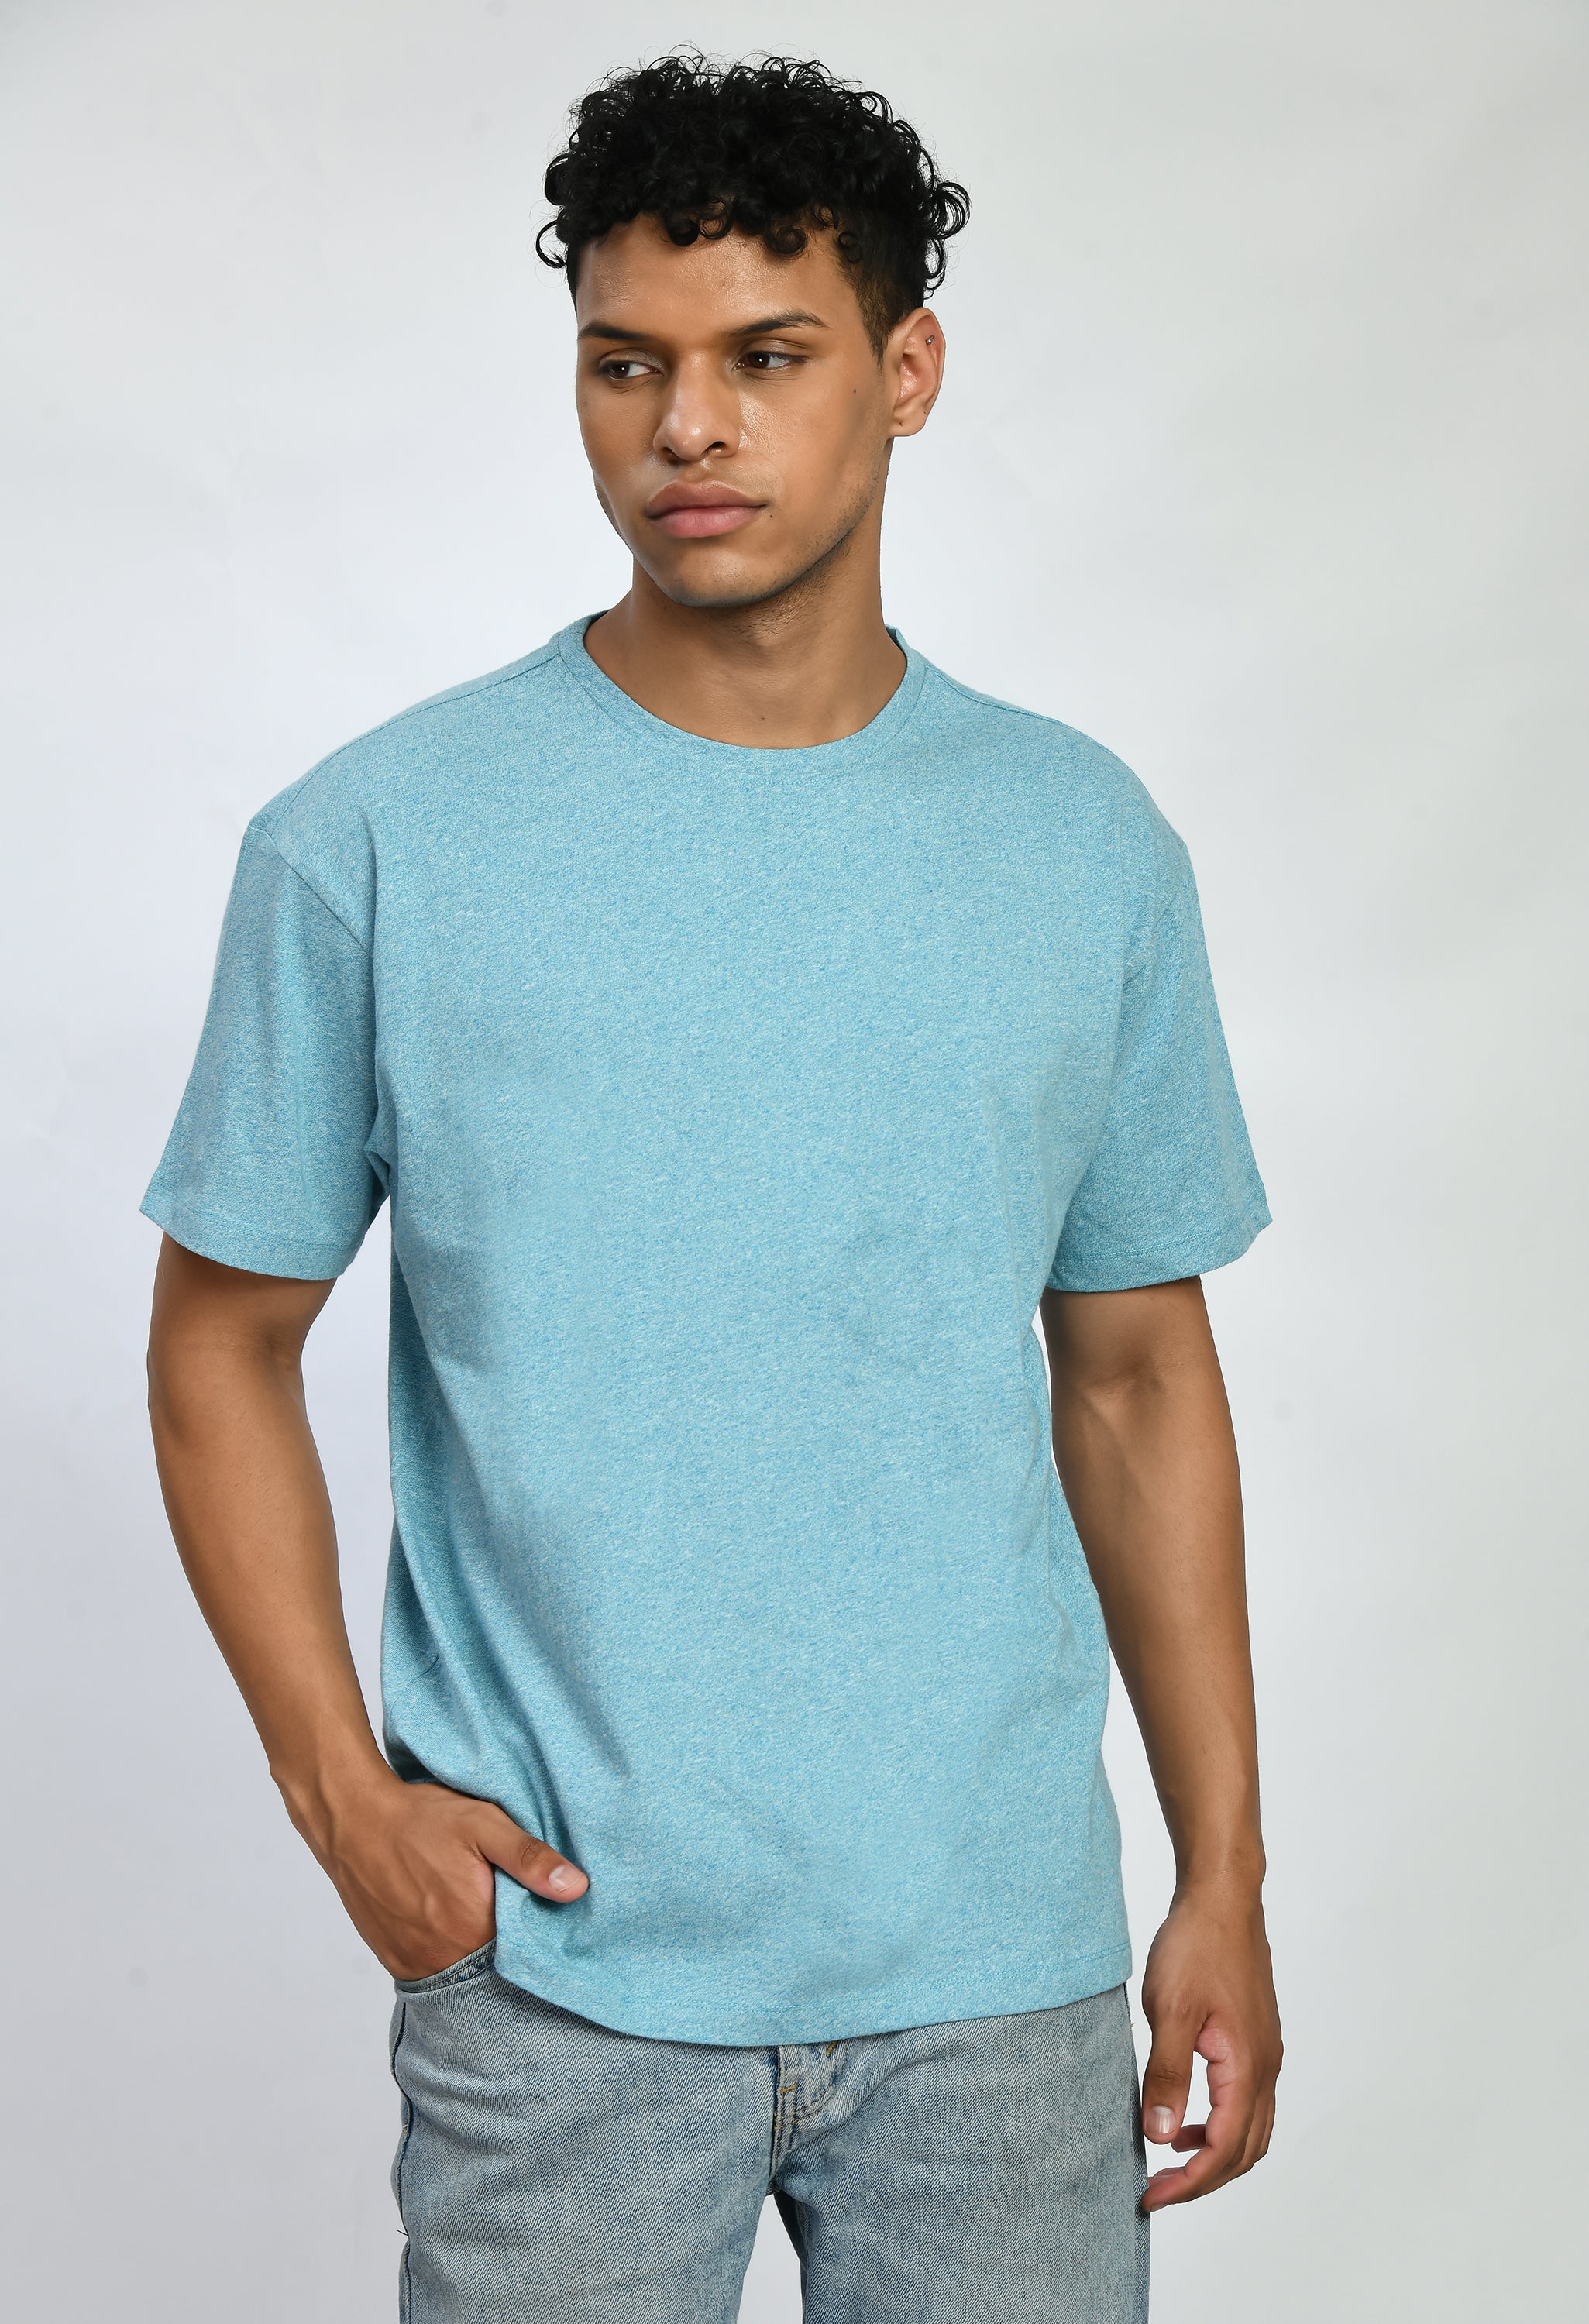 Sky Blue Color Oversized T-Shirt For Men's